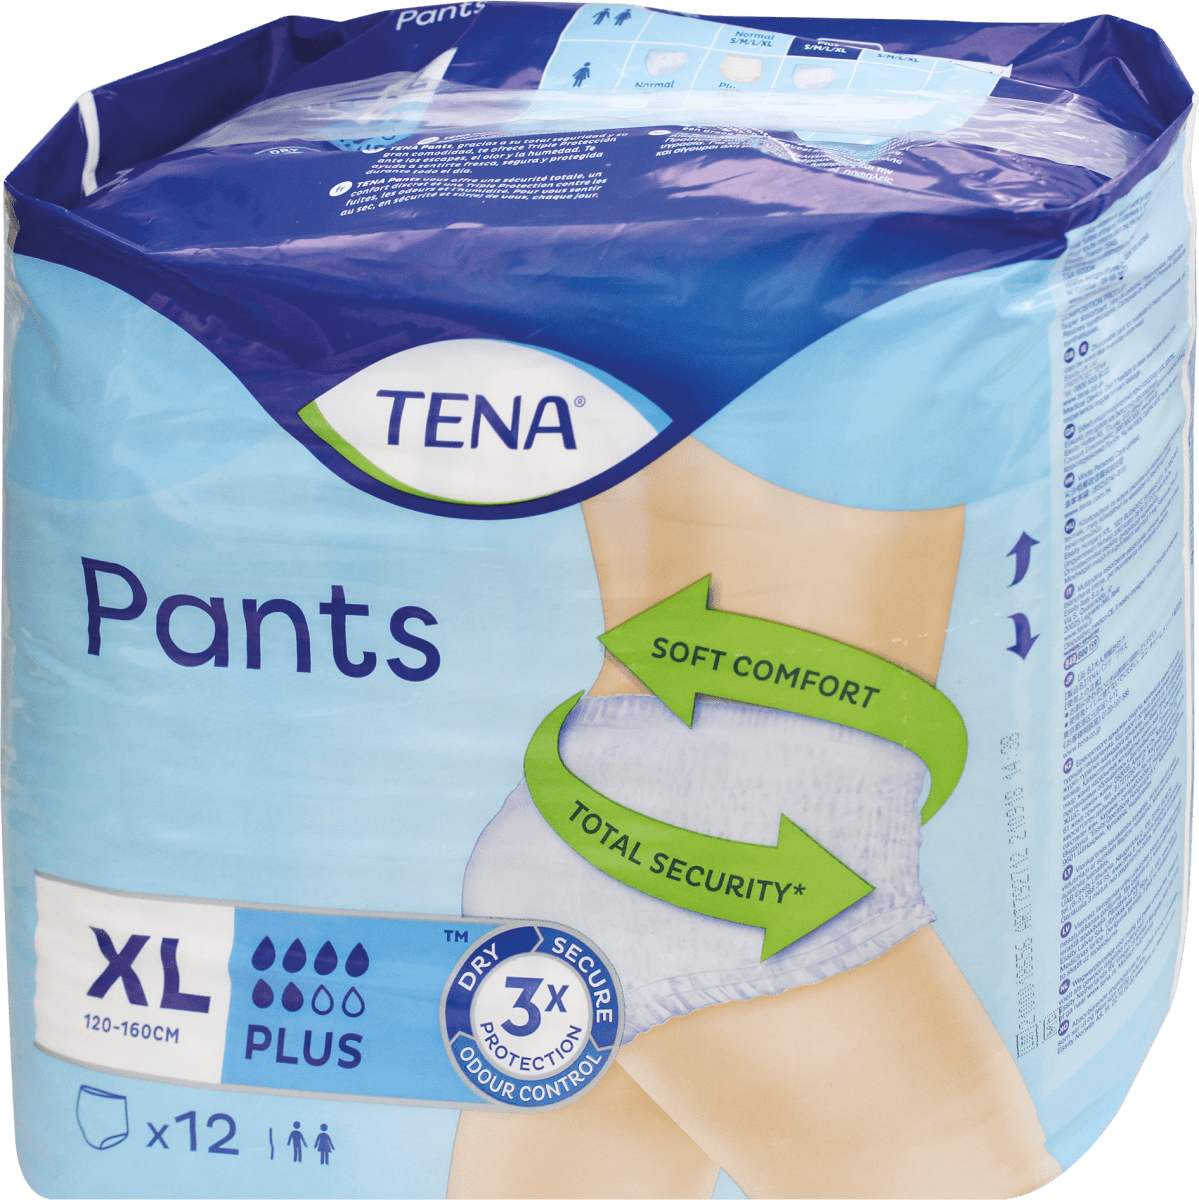 TENA Pants plus per incontinenza taglia XL, 12 pz Acquisti online